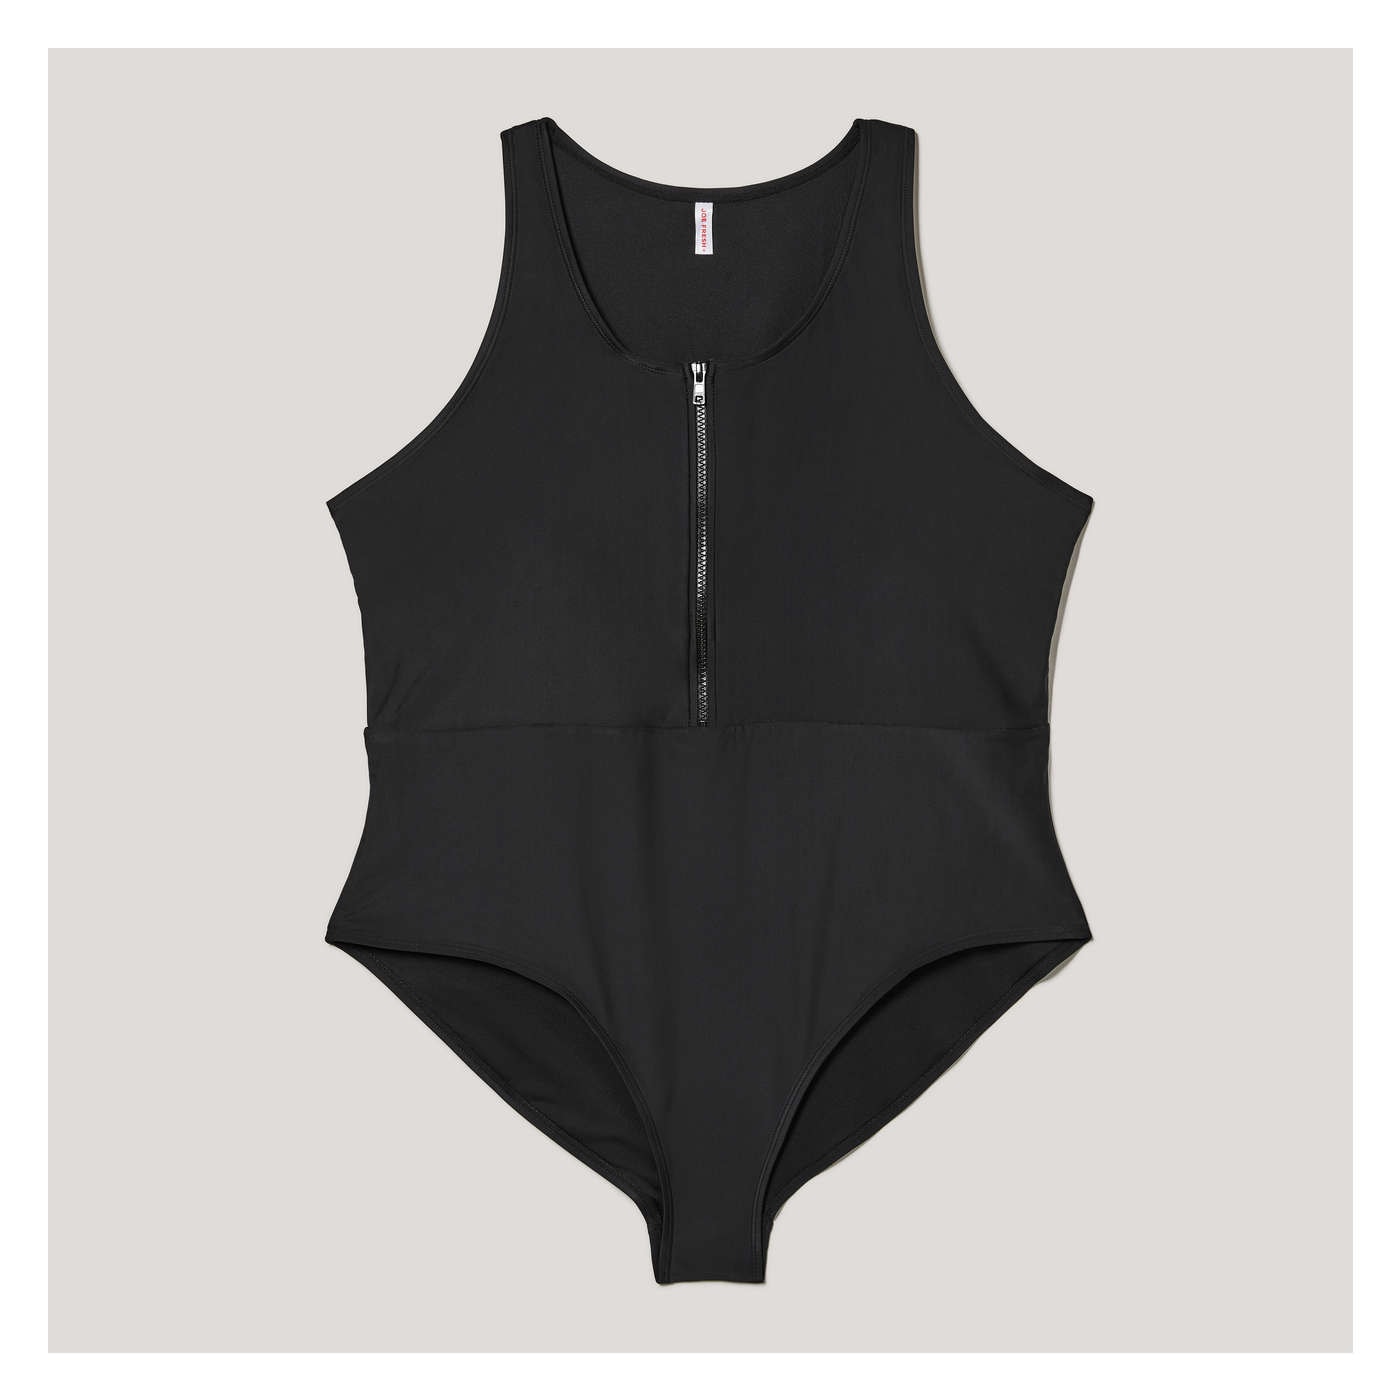 Half-Zip Swimsuit in Black from Joe Fresh